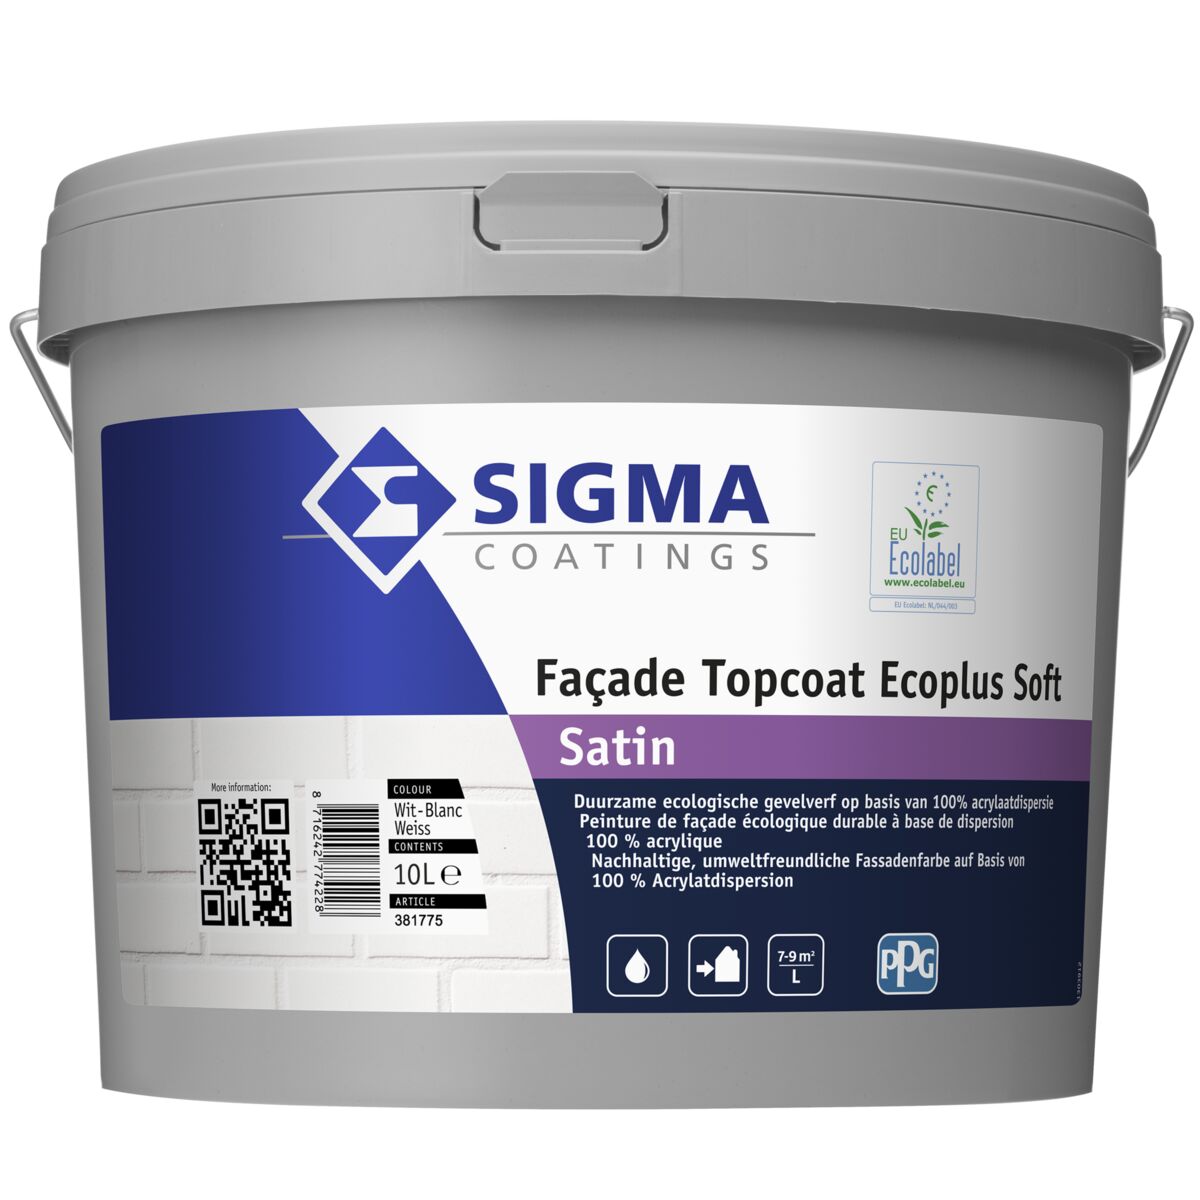 Sigma Façade Topcoat Ecoplus Soft Satin